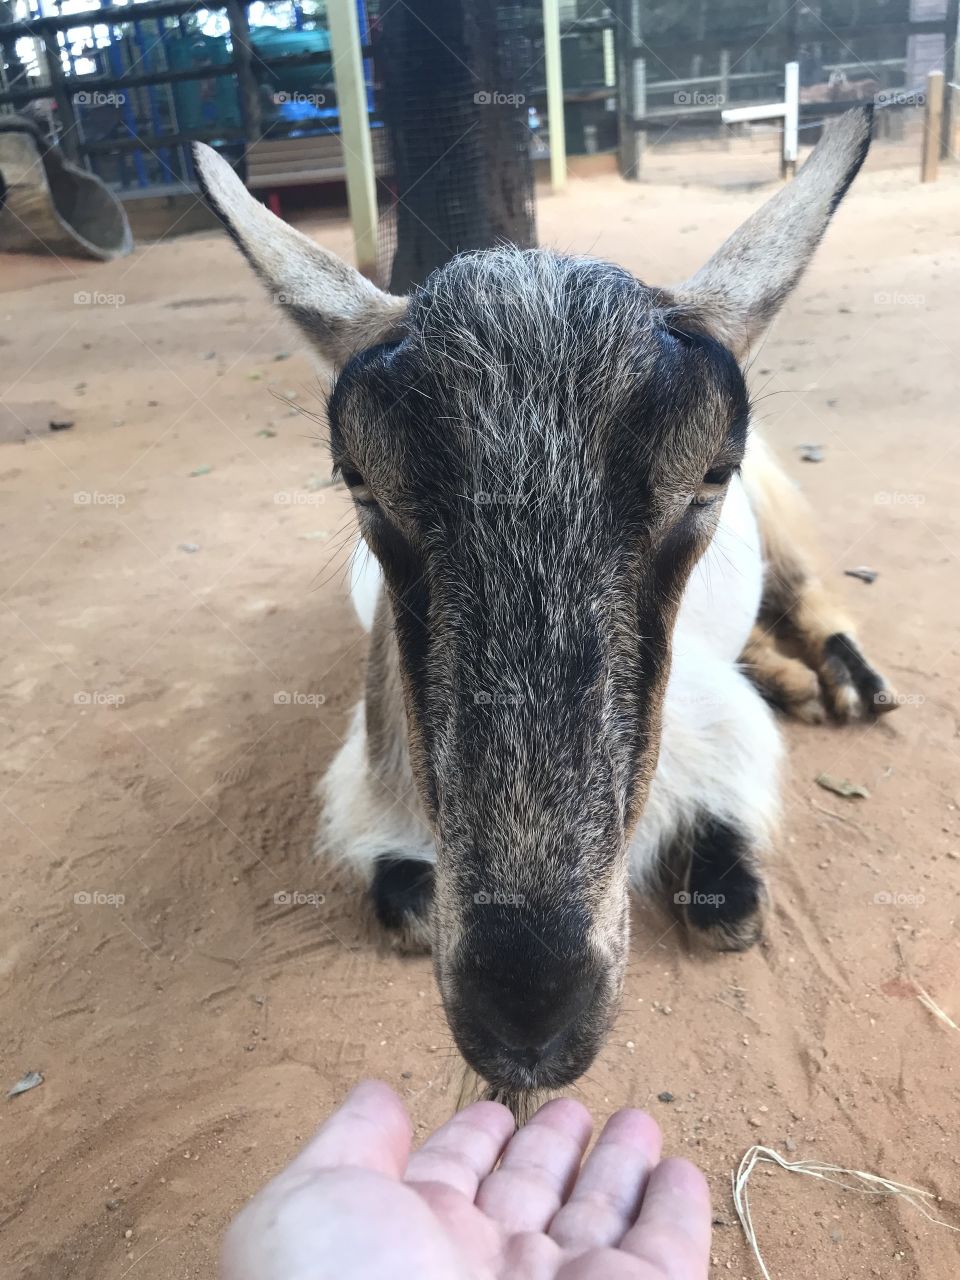 Feeding the goat 